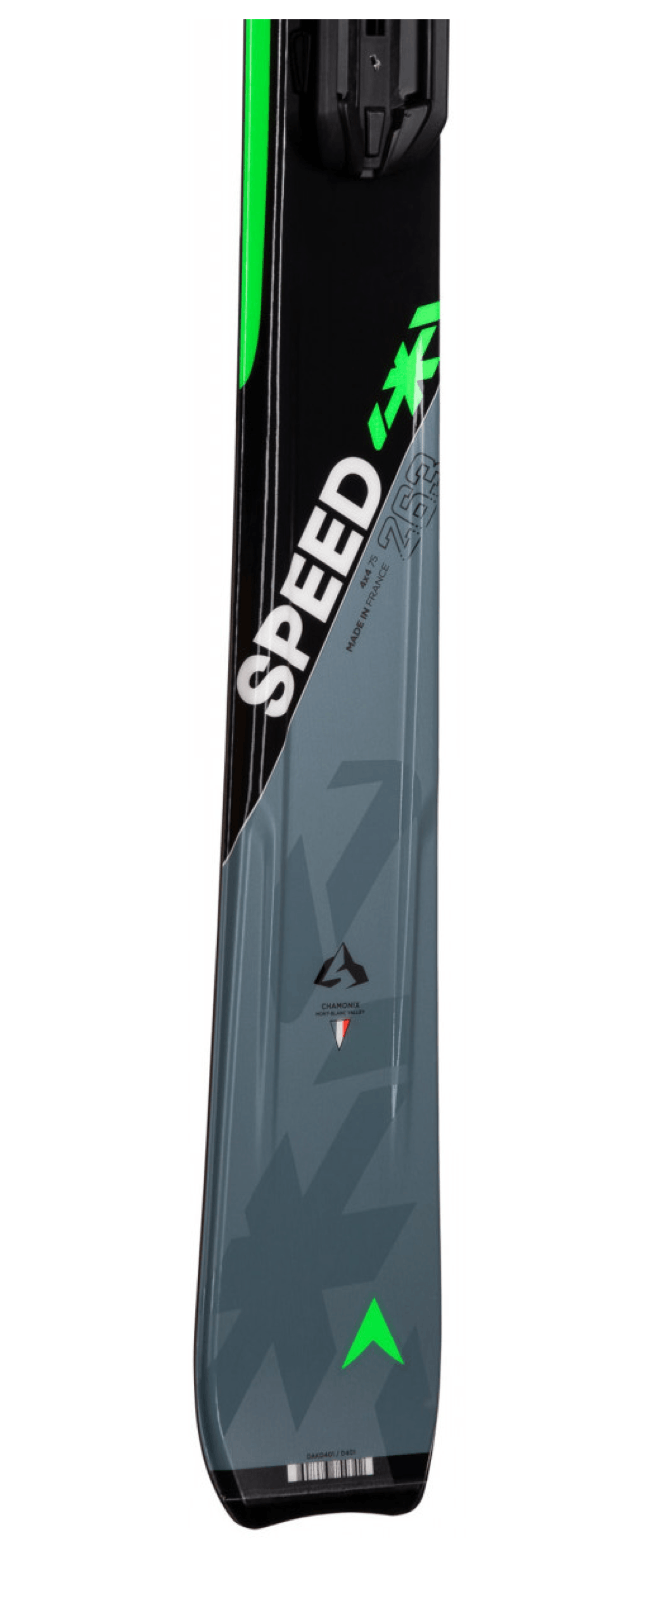 Dynastar Speed 4X4 263 Skis + Xpress 10 GW Ski Bindings · 2023 · 172 cm